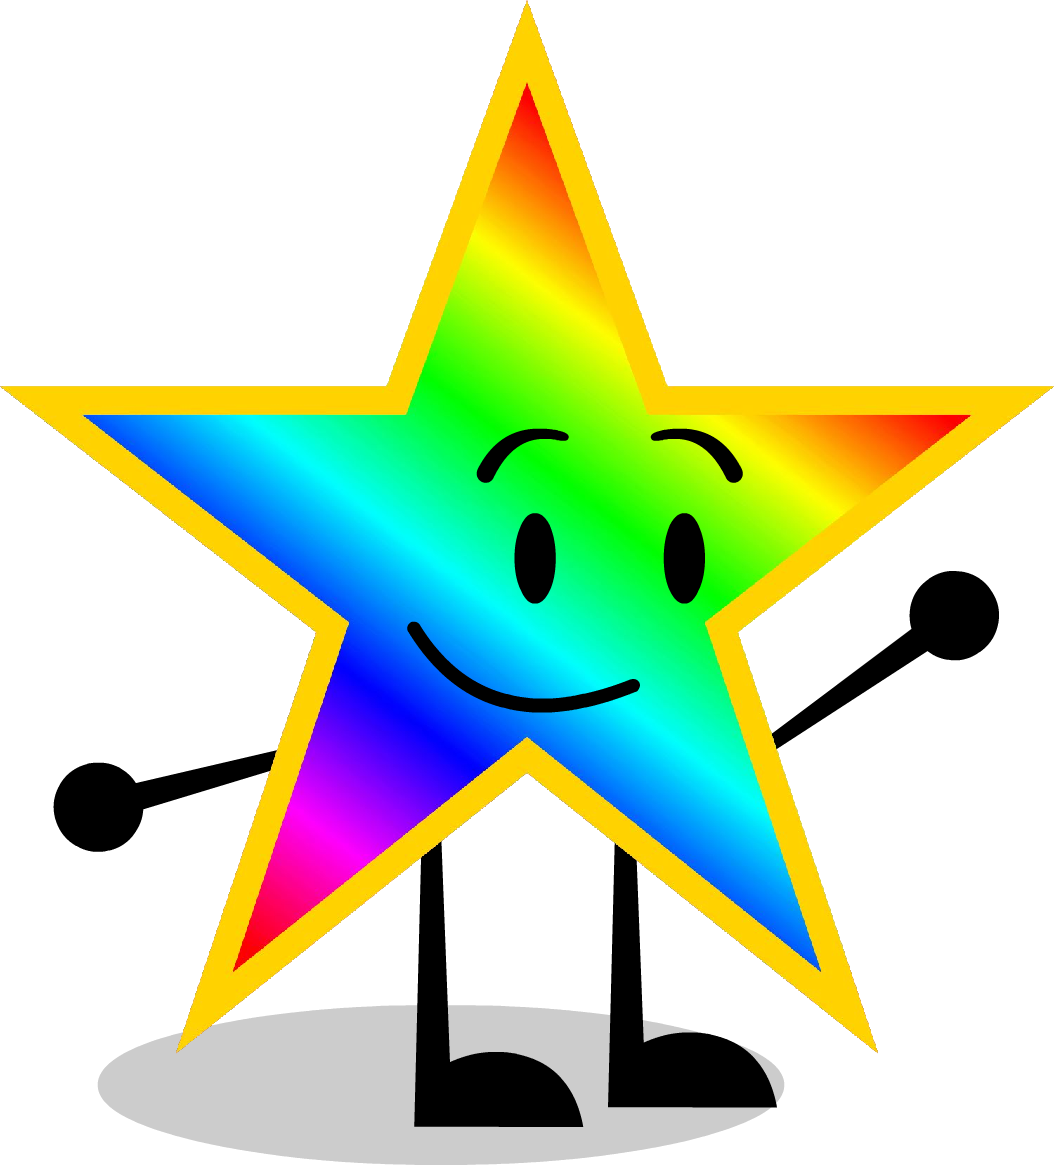 Rainbow Star (Commission) by kitkatyj on DeviantArt